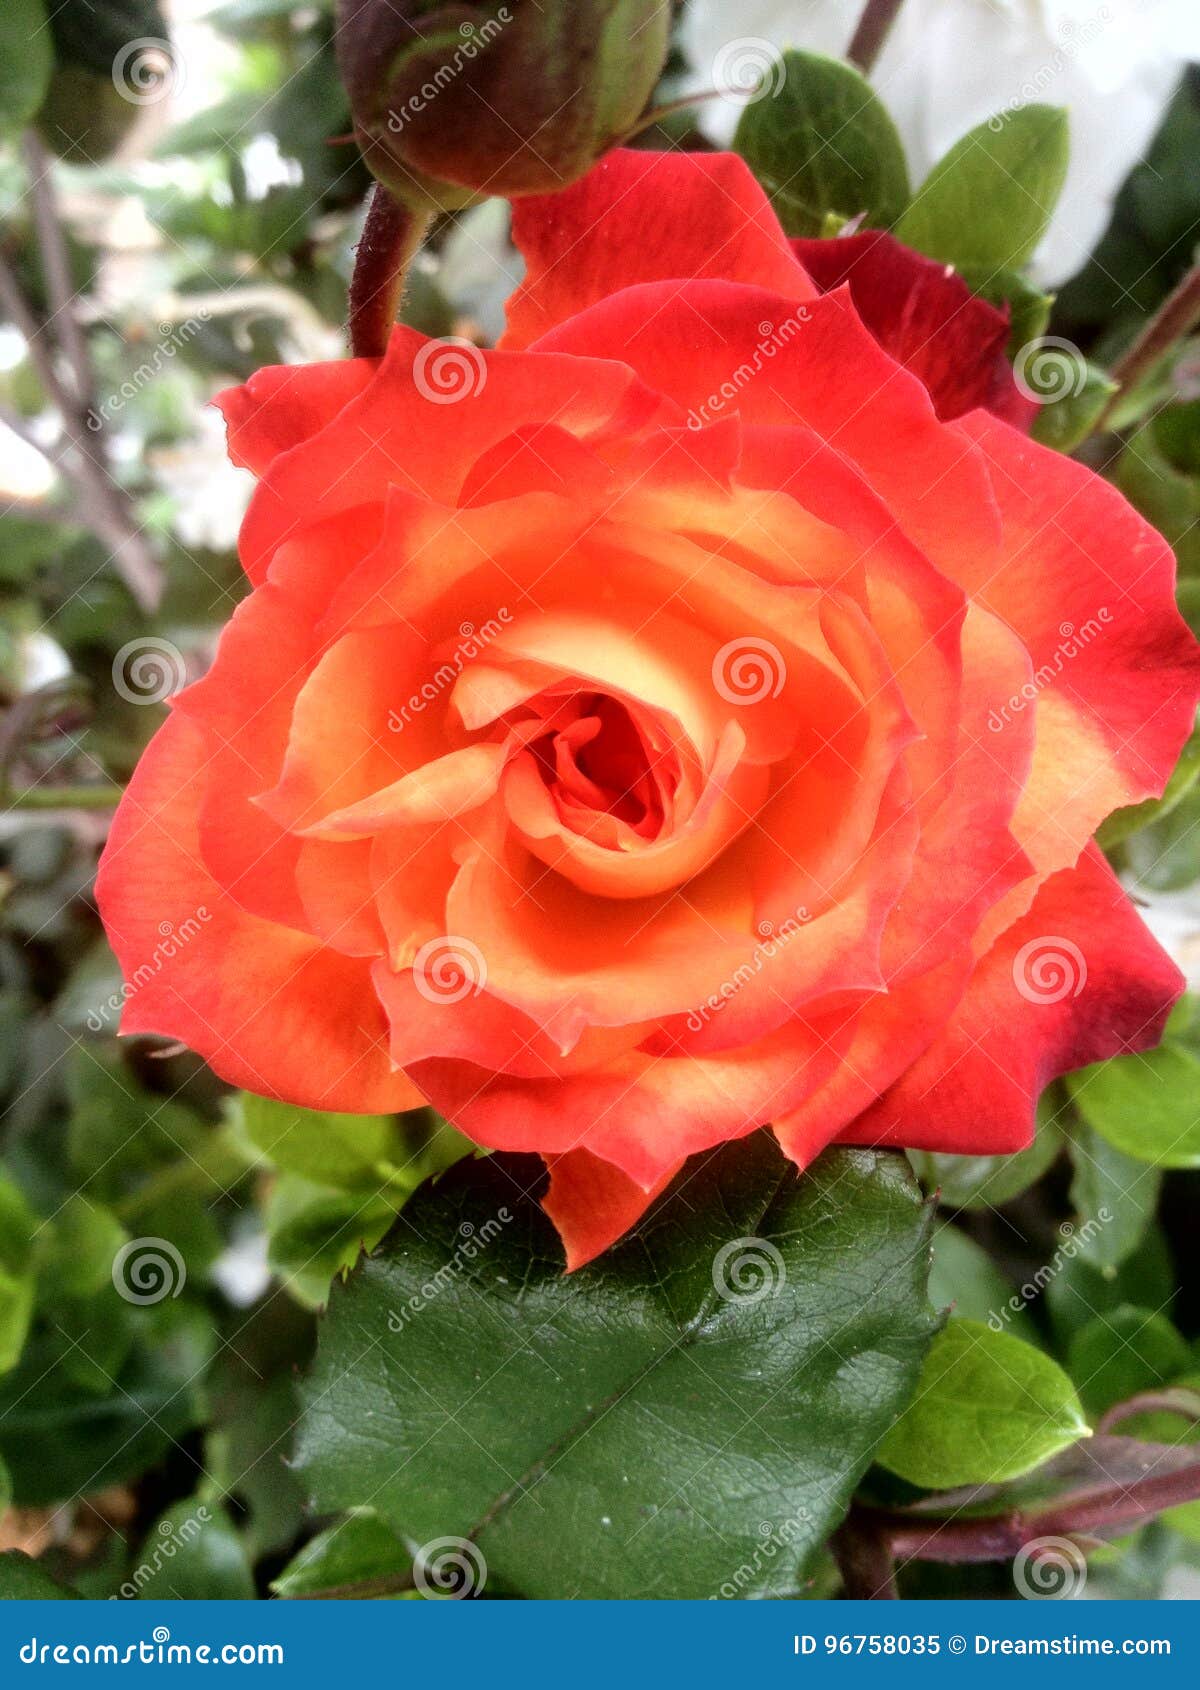 Rose stock image. Image of field, nature, valentine, garden - 96758035